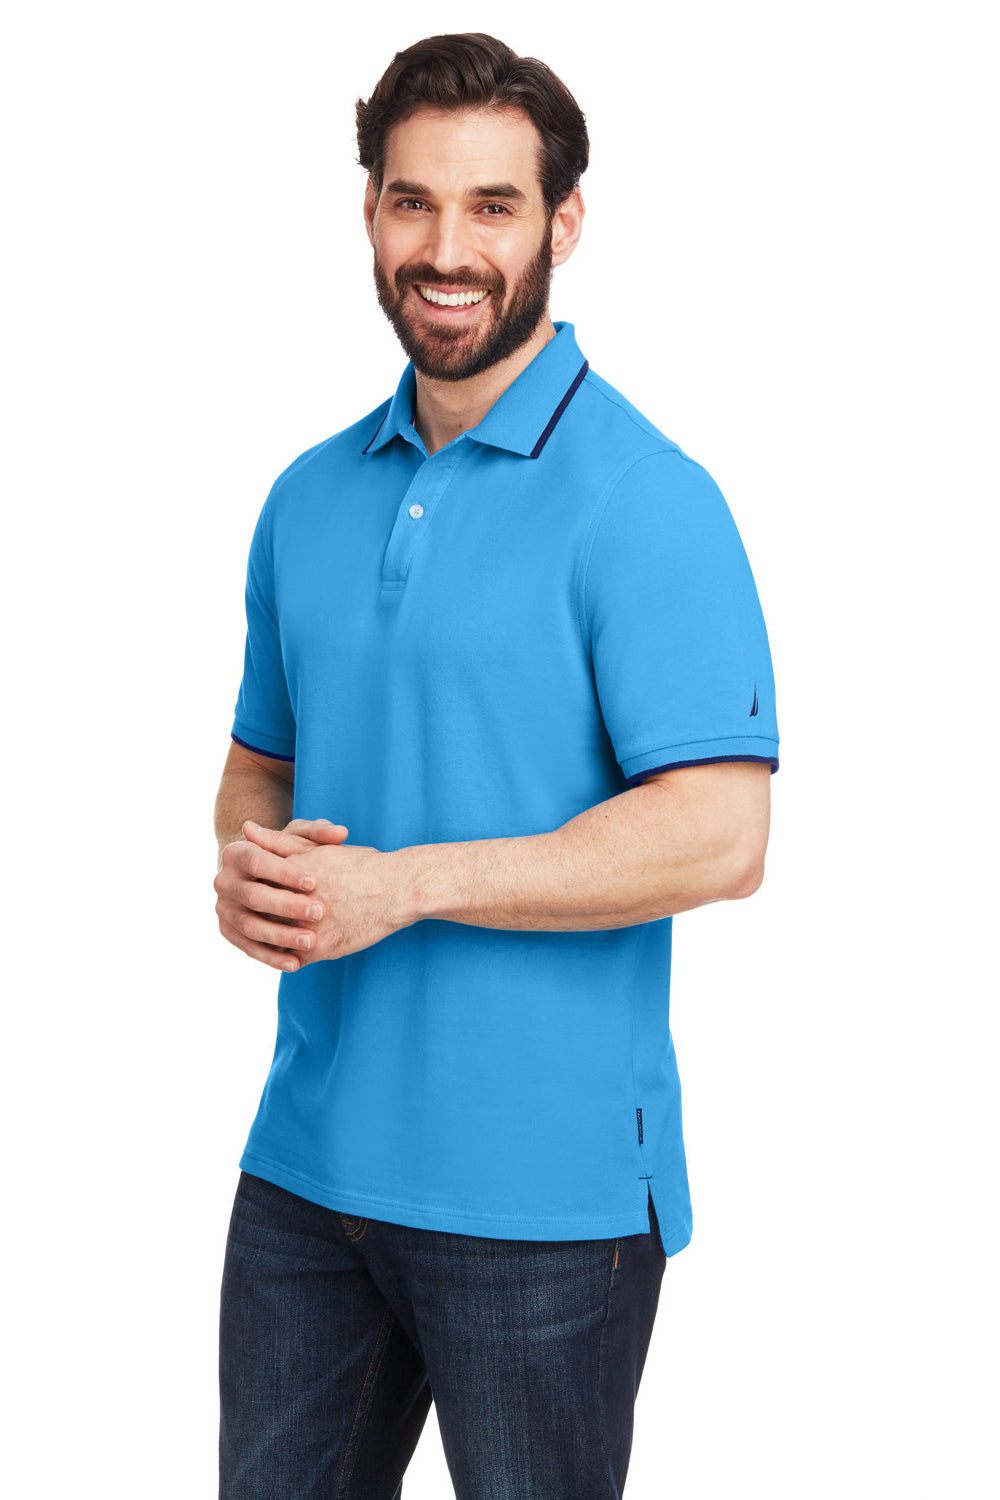 Nautica N17165 Mens Desk Short Sleeve Polo Shirt Azure Blue/Navy Blue 3Q